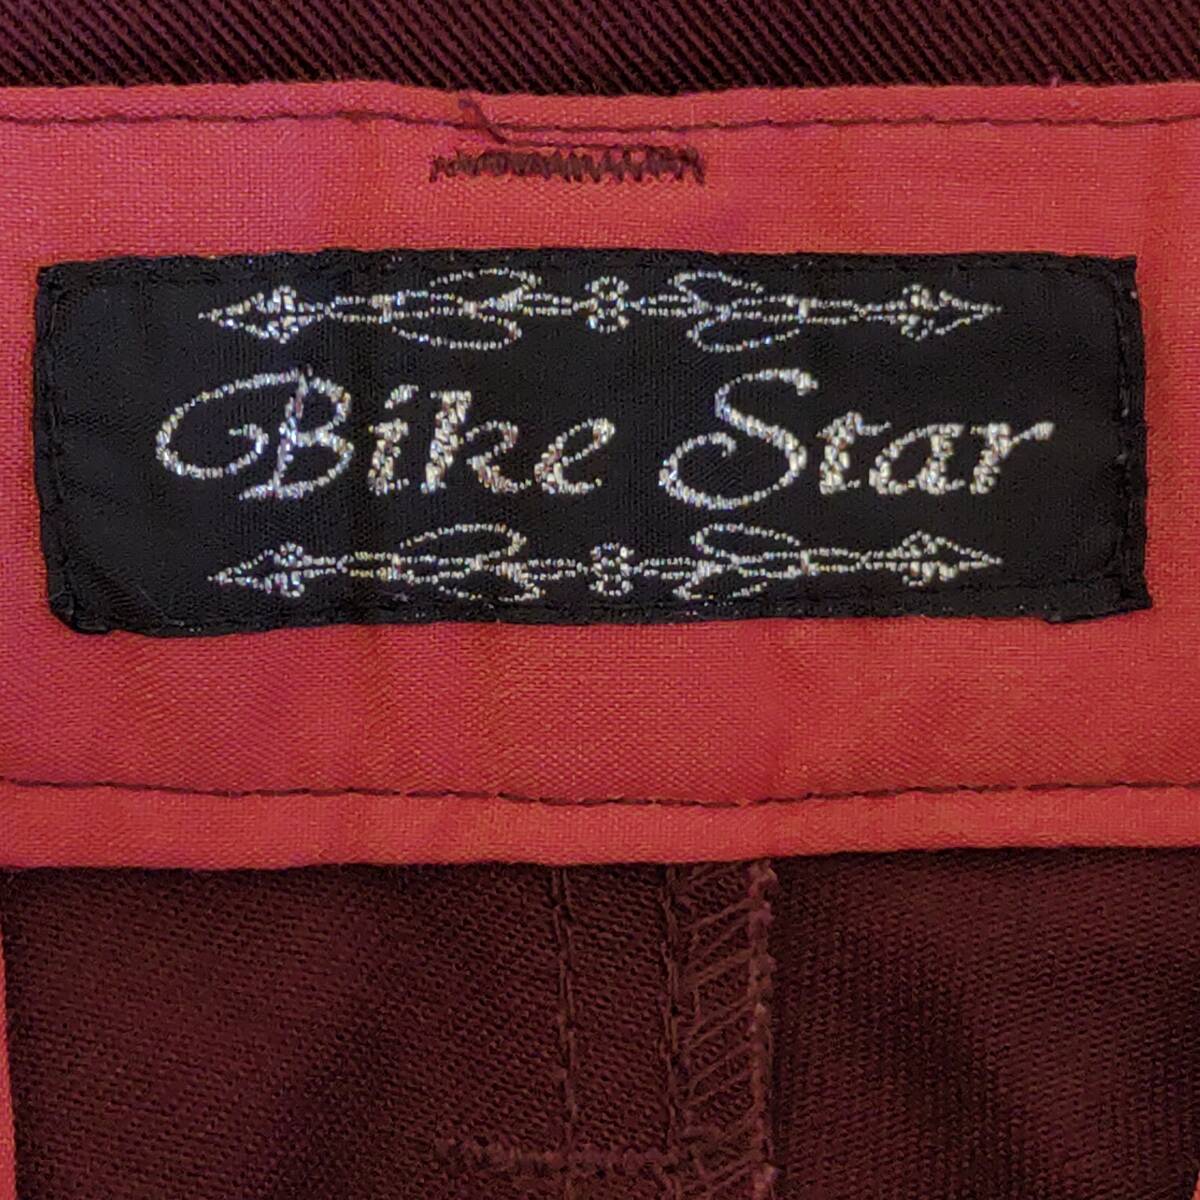 【Bike Star】バイクスター スラックス テーパード パンツ チノパン オフィス カジュアル デイリー レッド 紳士服 メンズ サイズL/Y10116DD_画像8